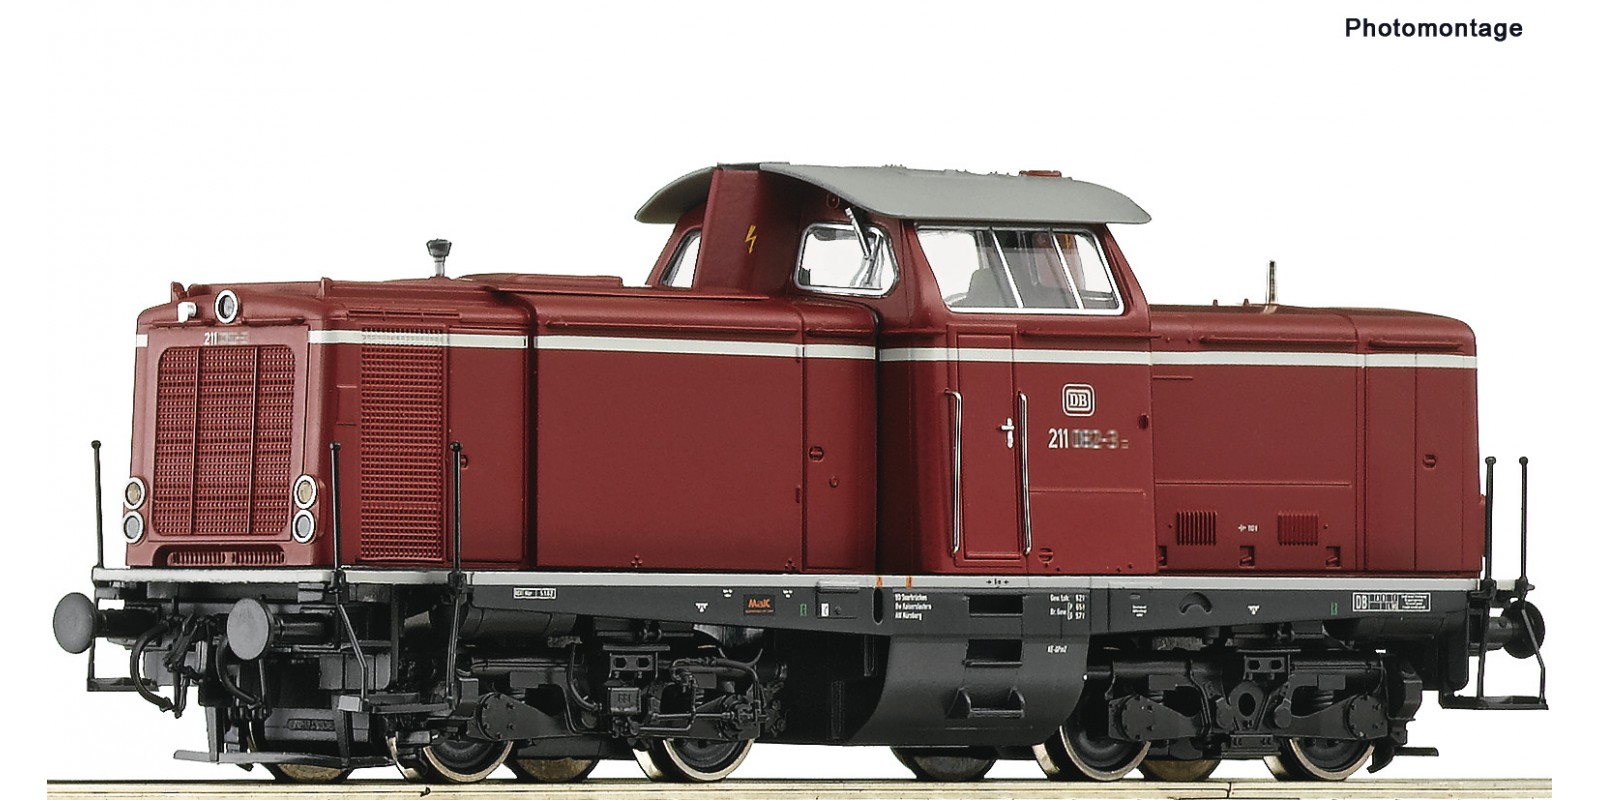 RO52526 - Diesel locomotive class 211, DB